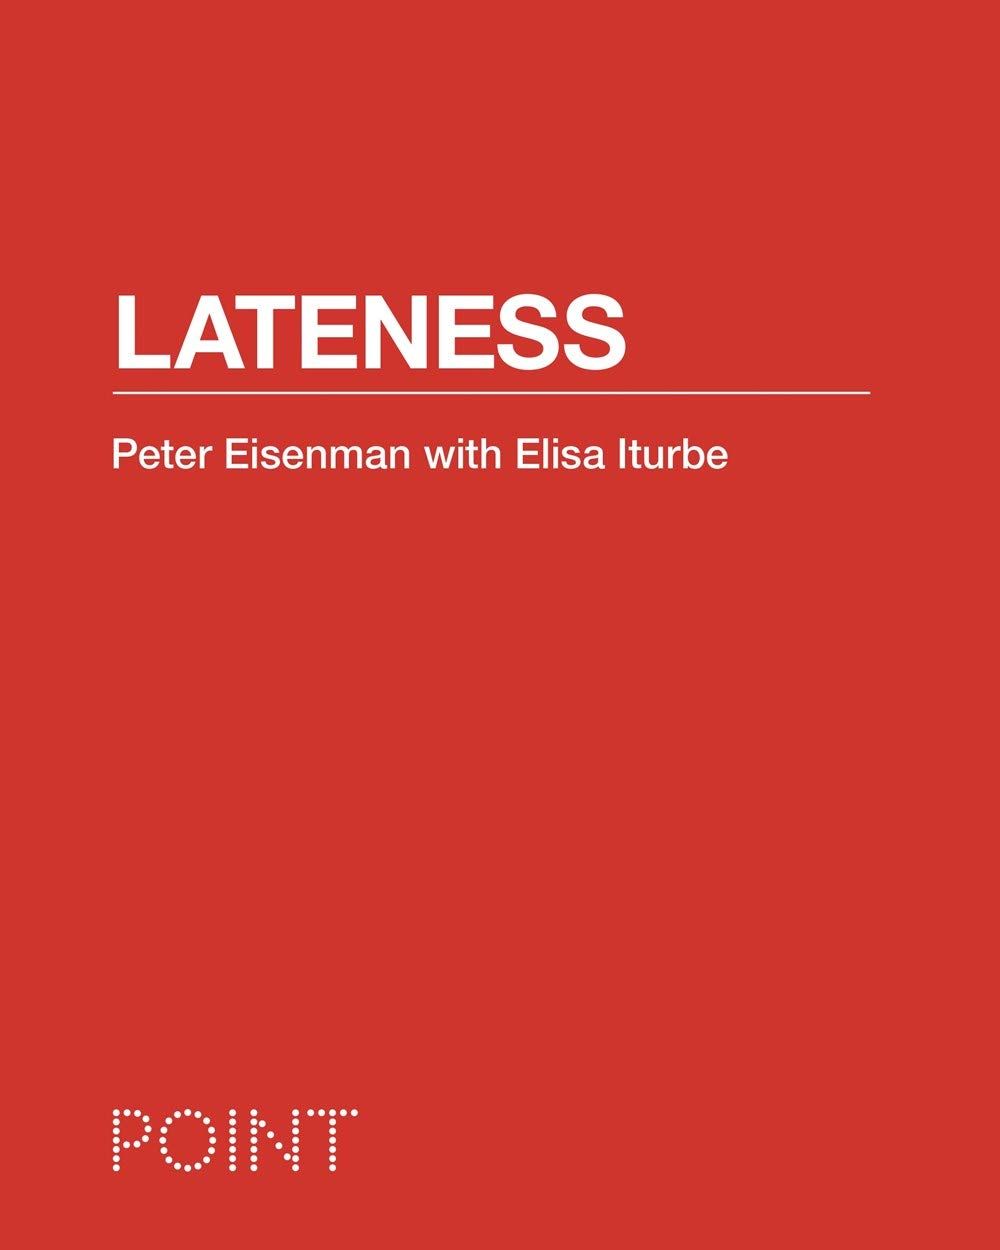 Peter Eisenman (con Elisa Iturbe) – Lateness (Princeton University Press, Princepton Oxford Beijing 2020)